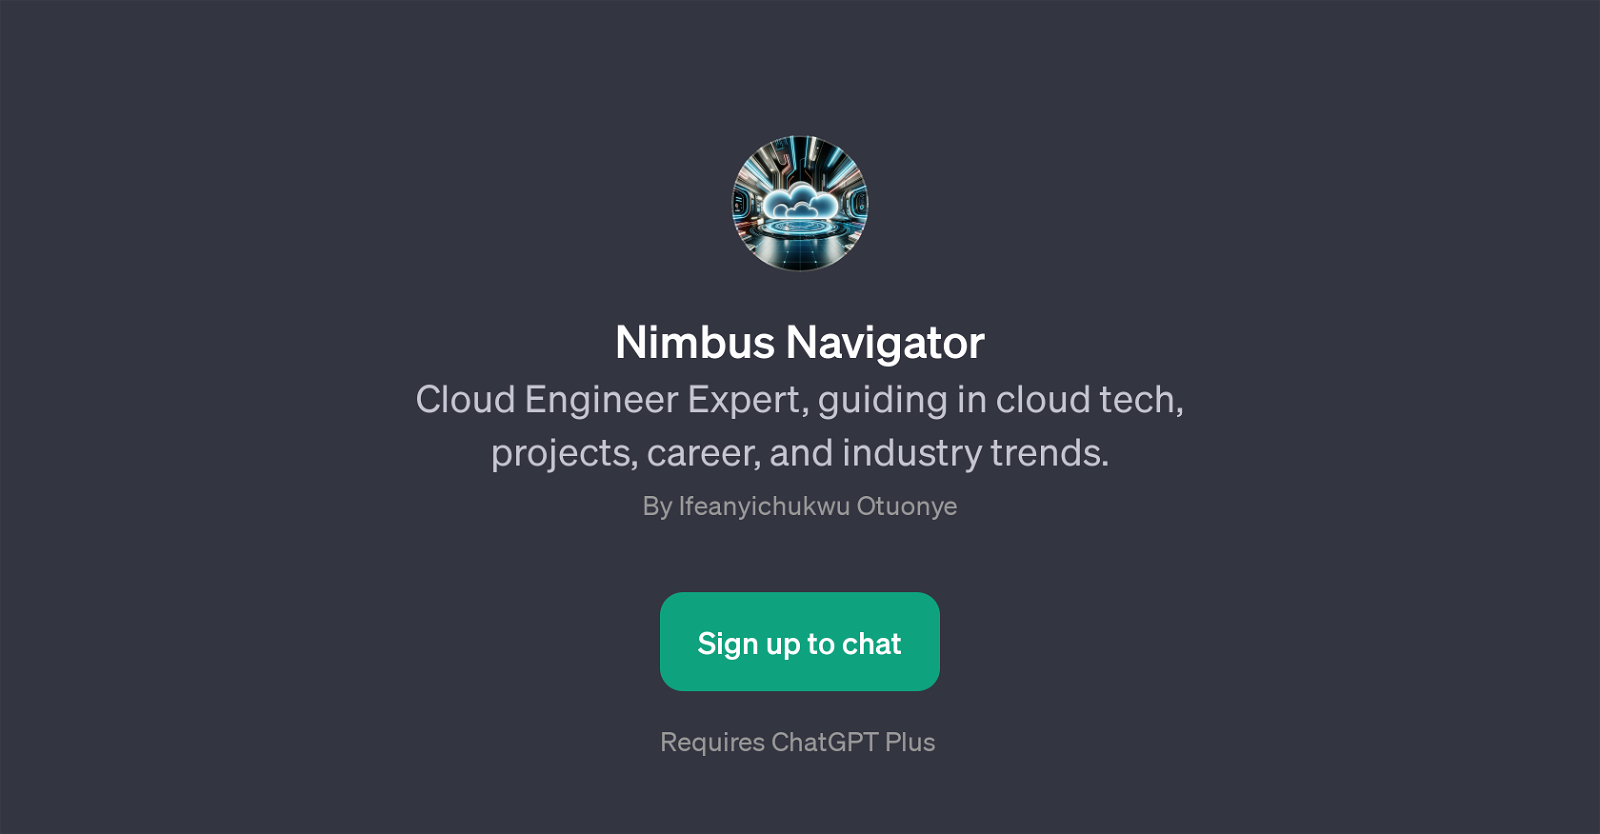 Nimbus Navigator website